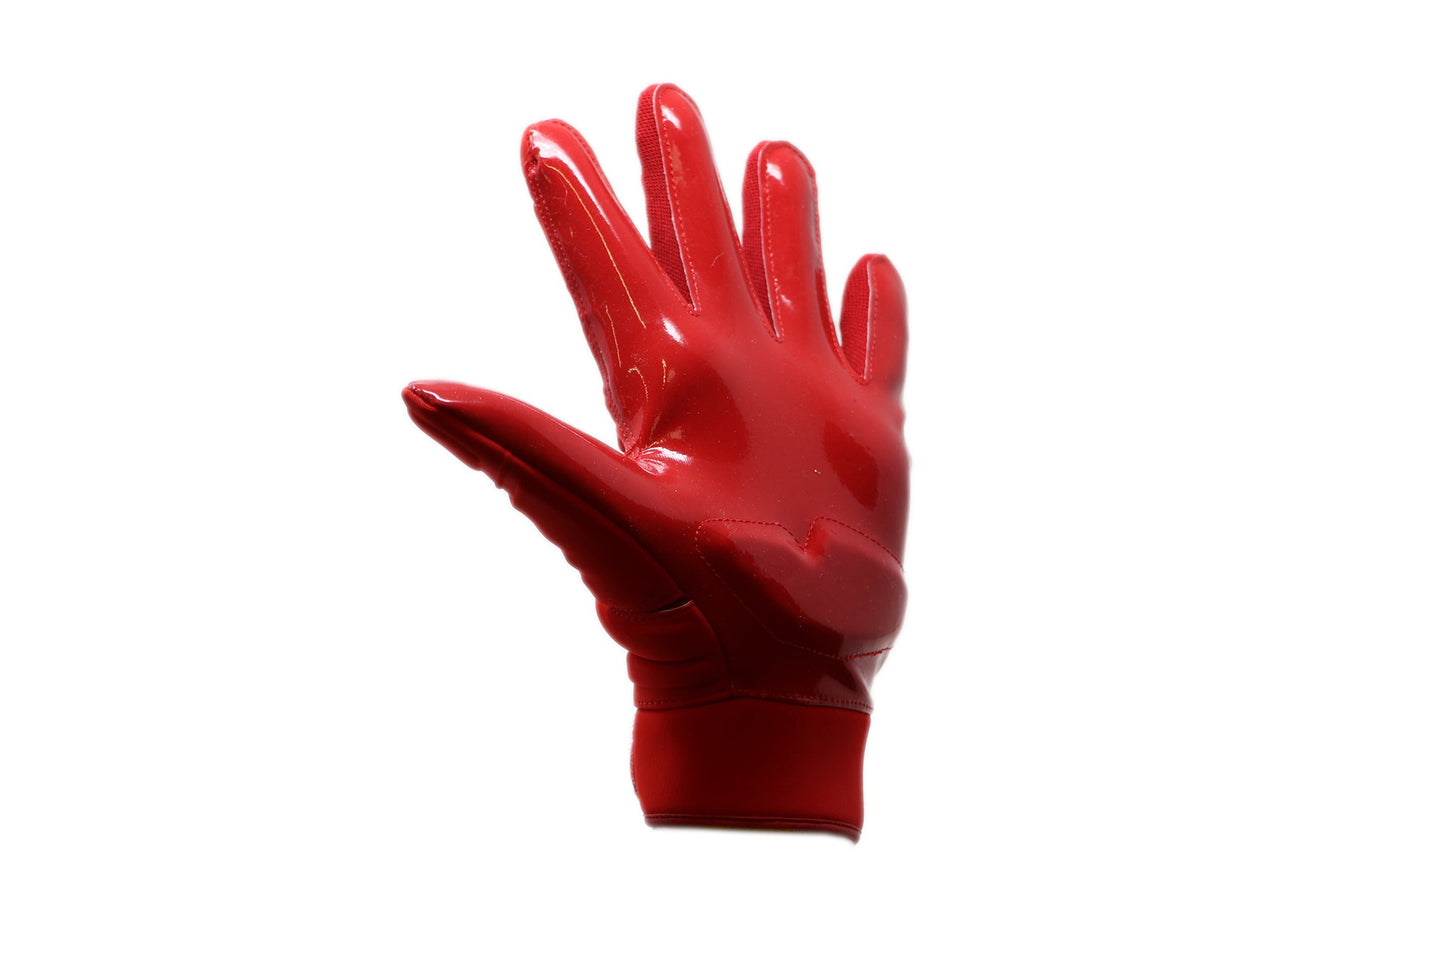 FLG-03 profi rukavice na americký fotbal, OL,DL, červené